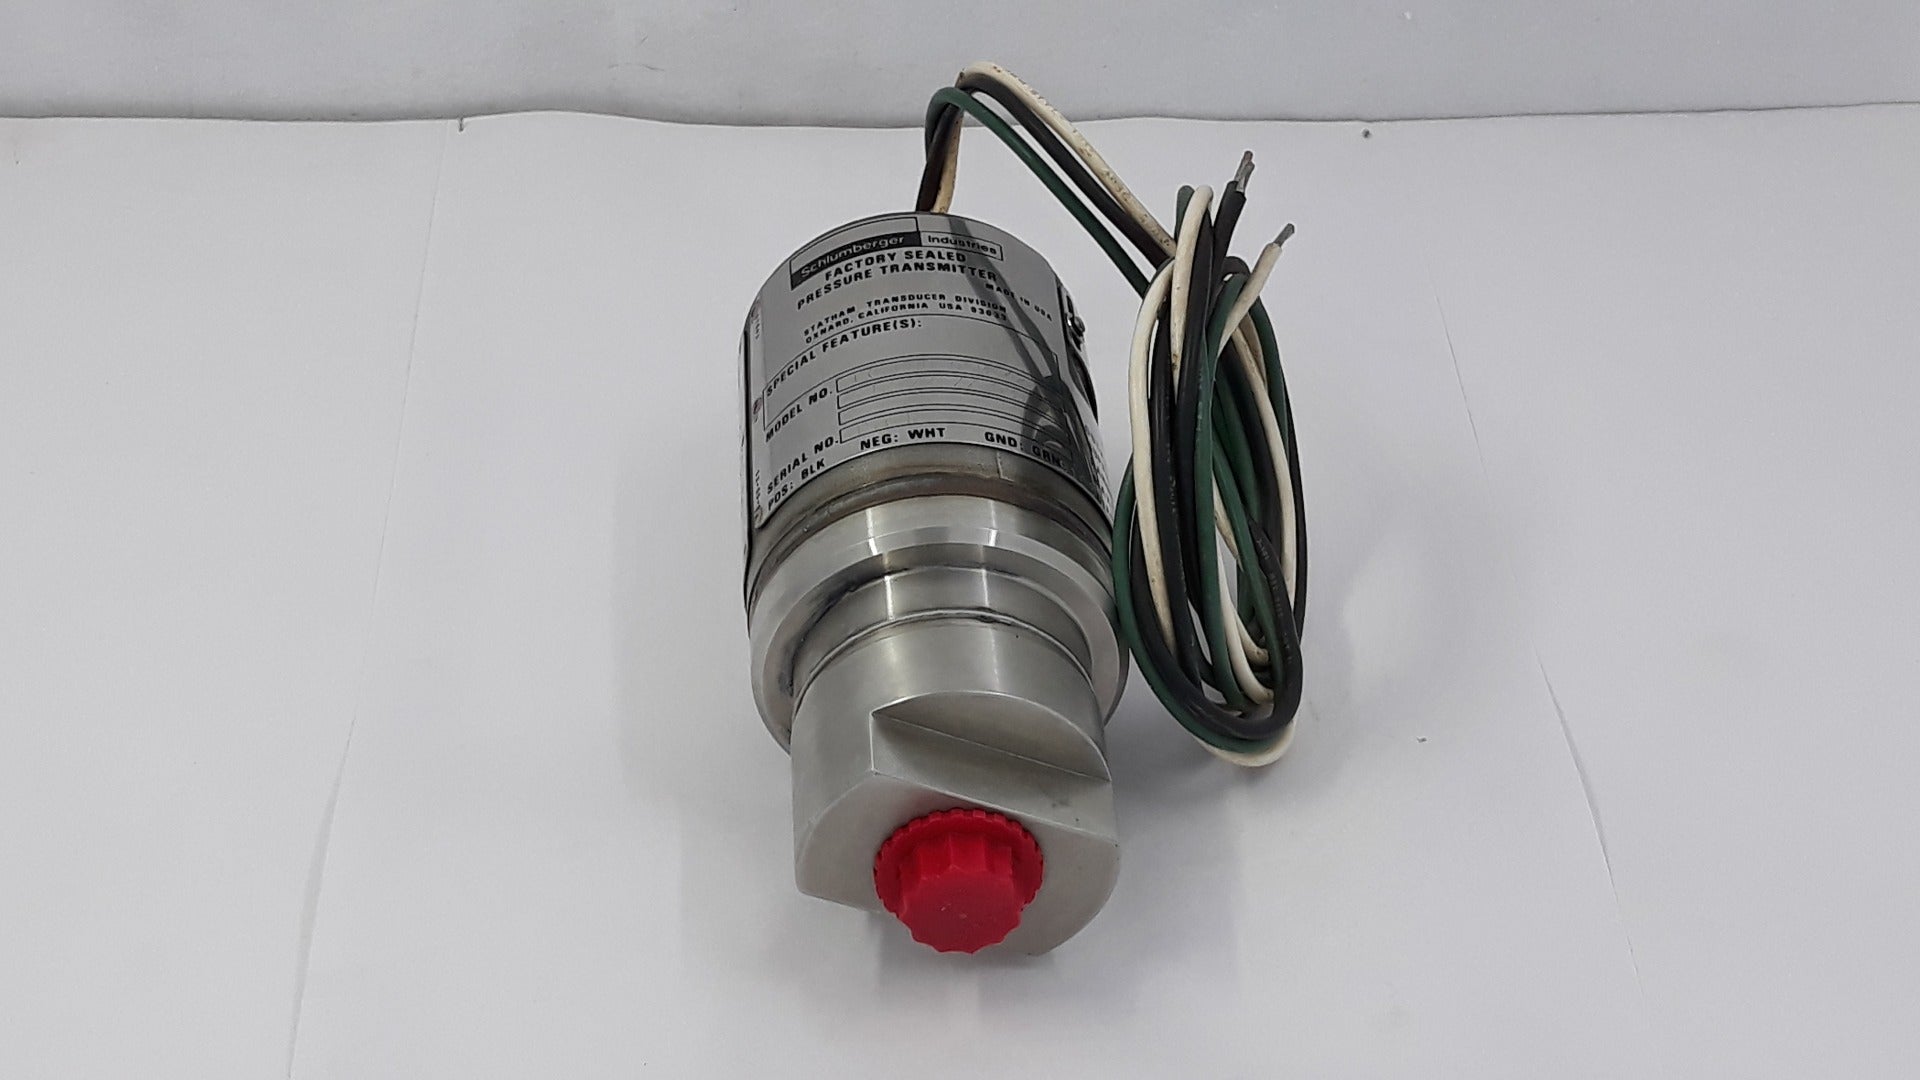 Schlumberger Pg3000-05M-42-12-xx-xx-93 Pressure Transmitter